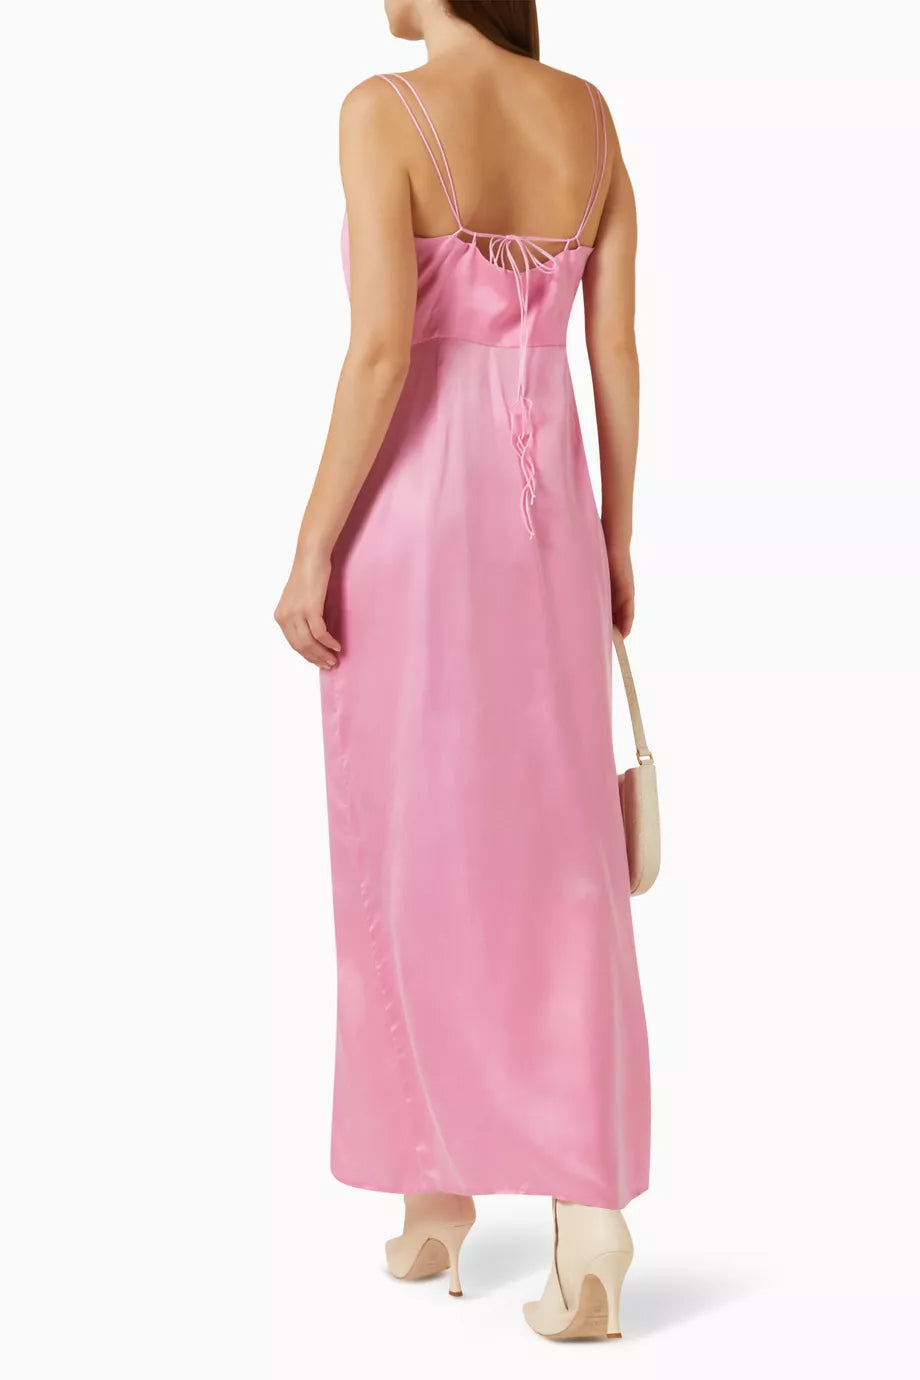 Pandora Dress - Flash Pink